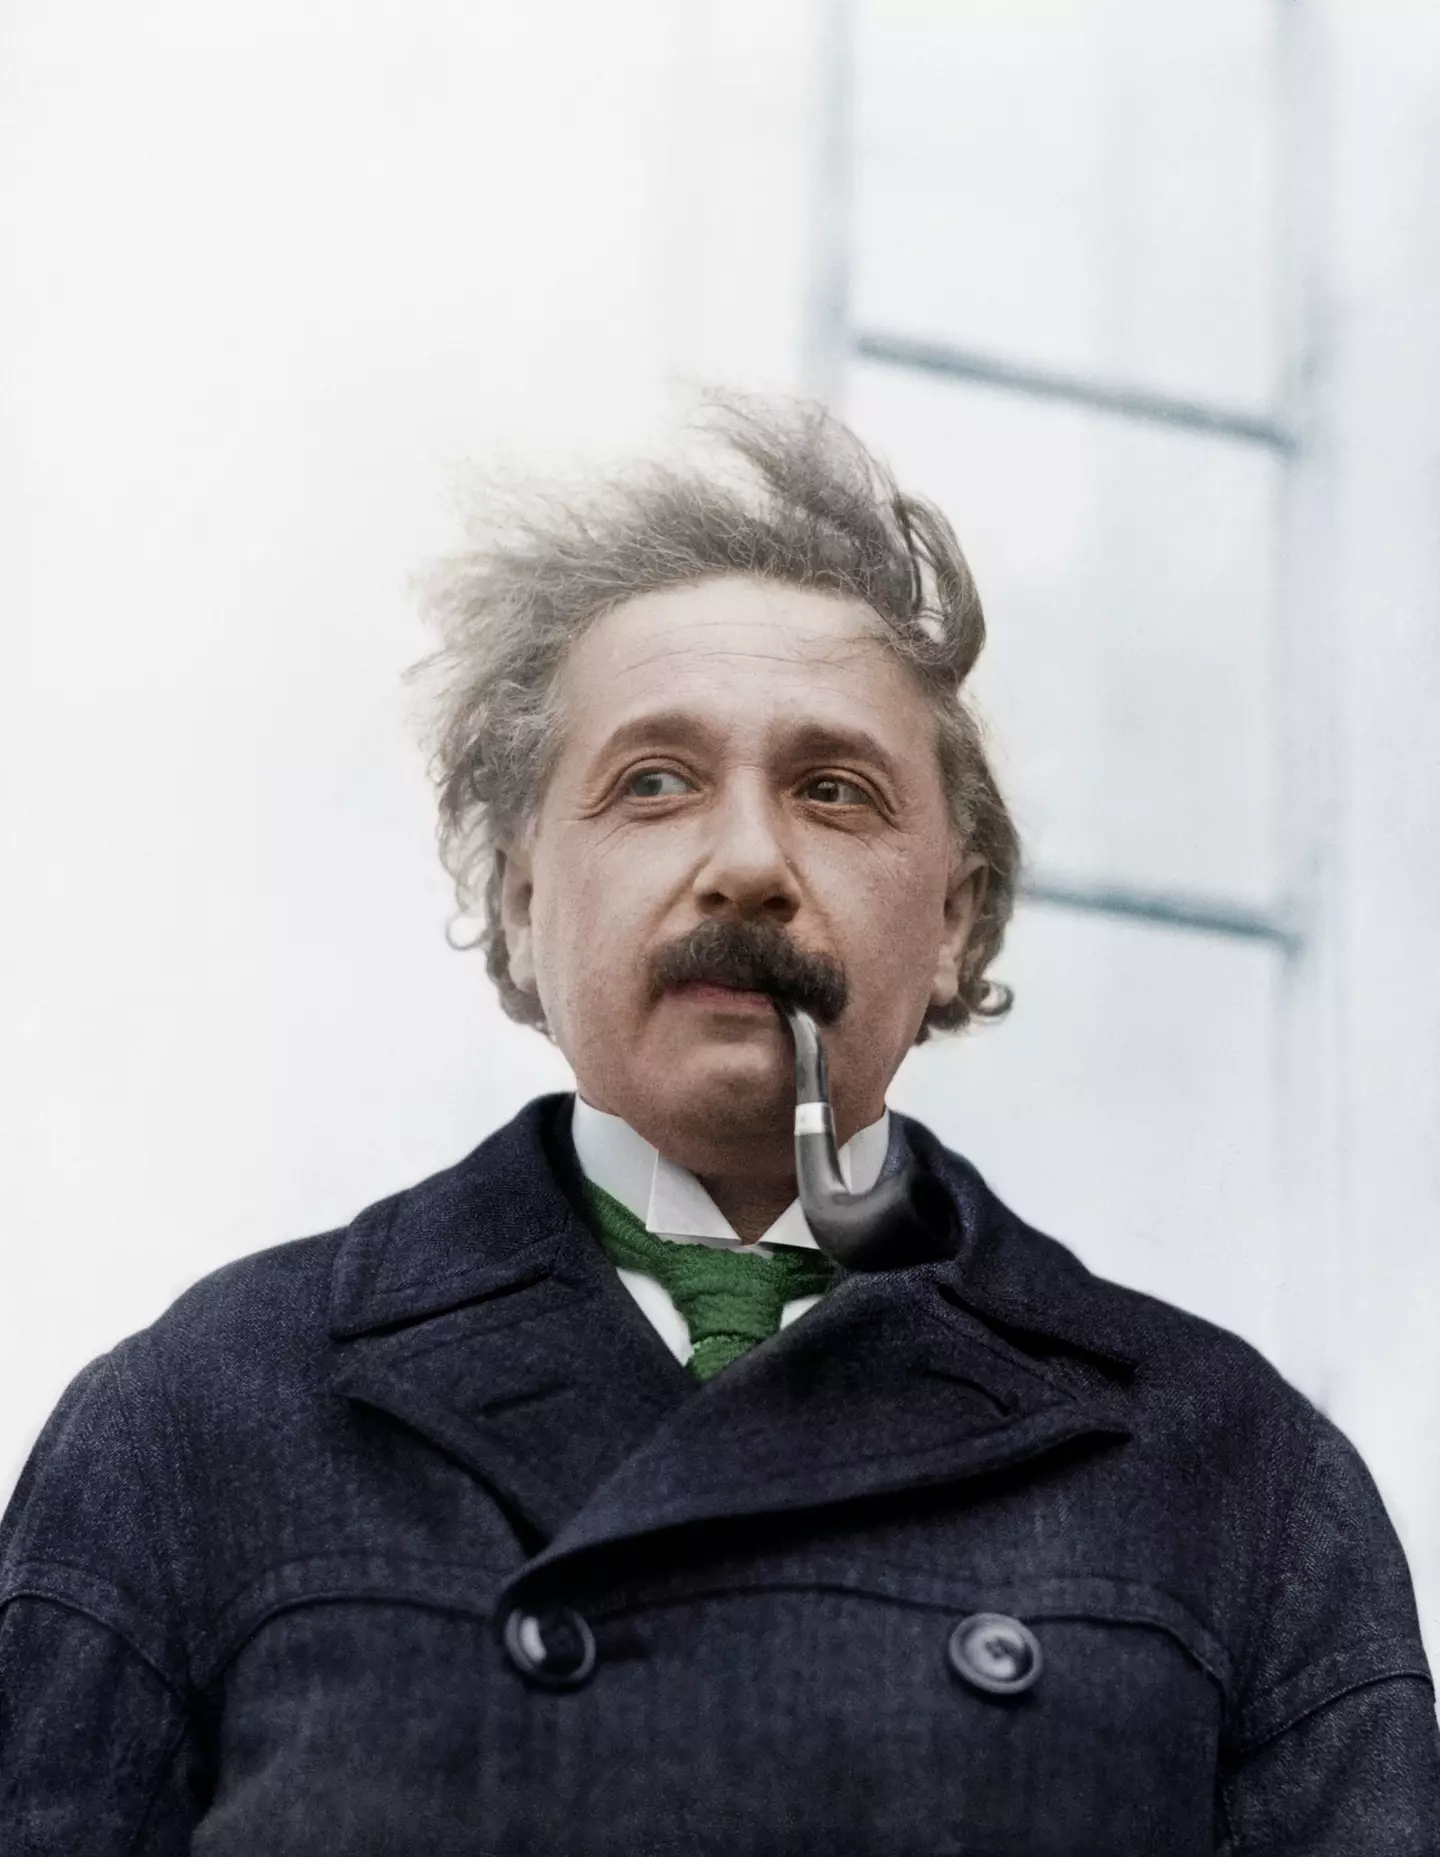 Albert Einstein is one of history's greatest creative thinkers.